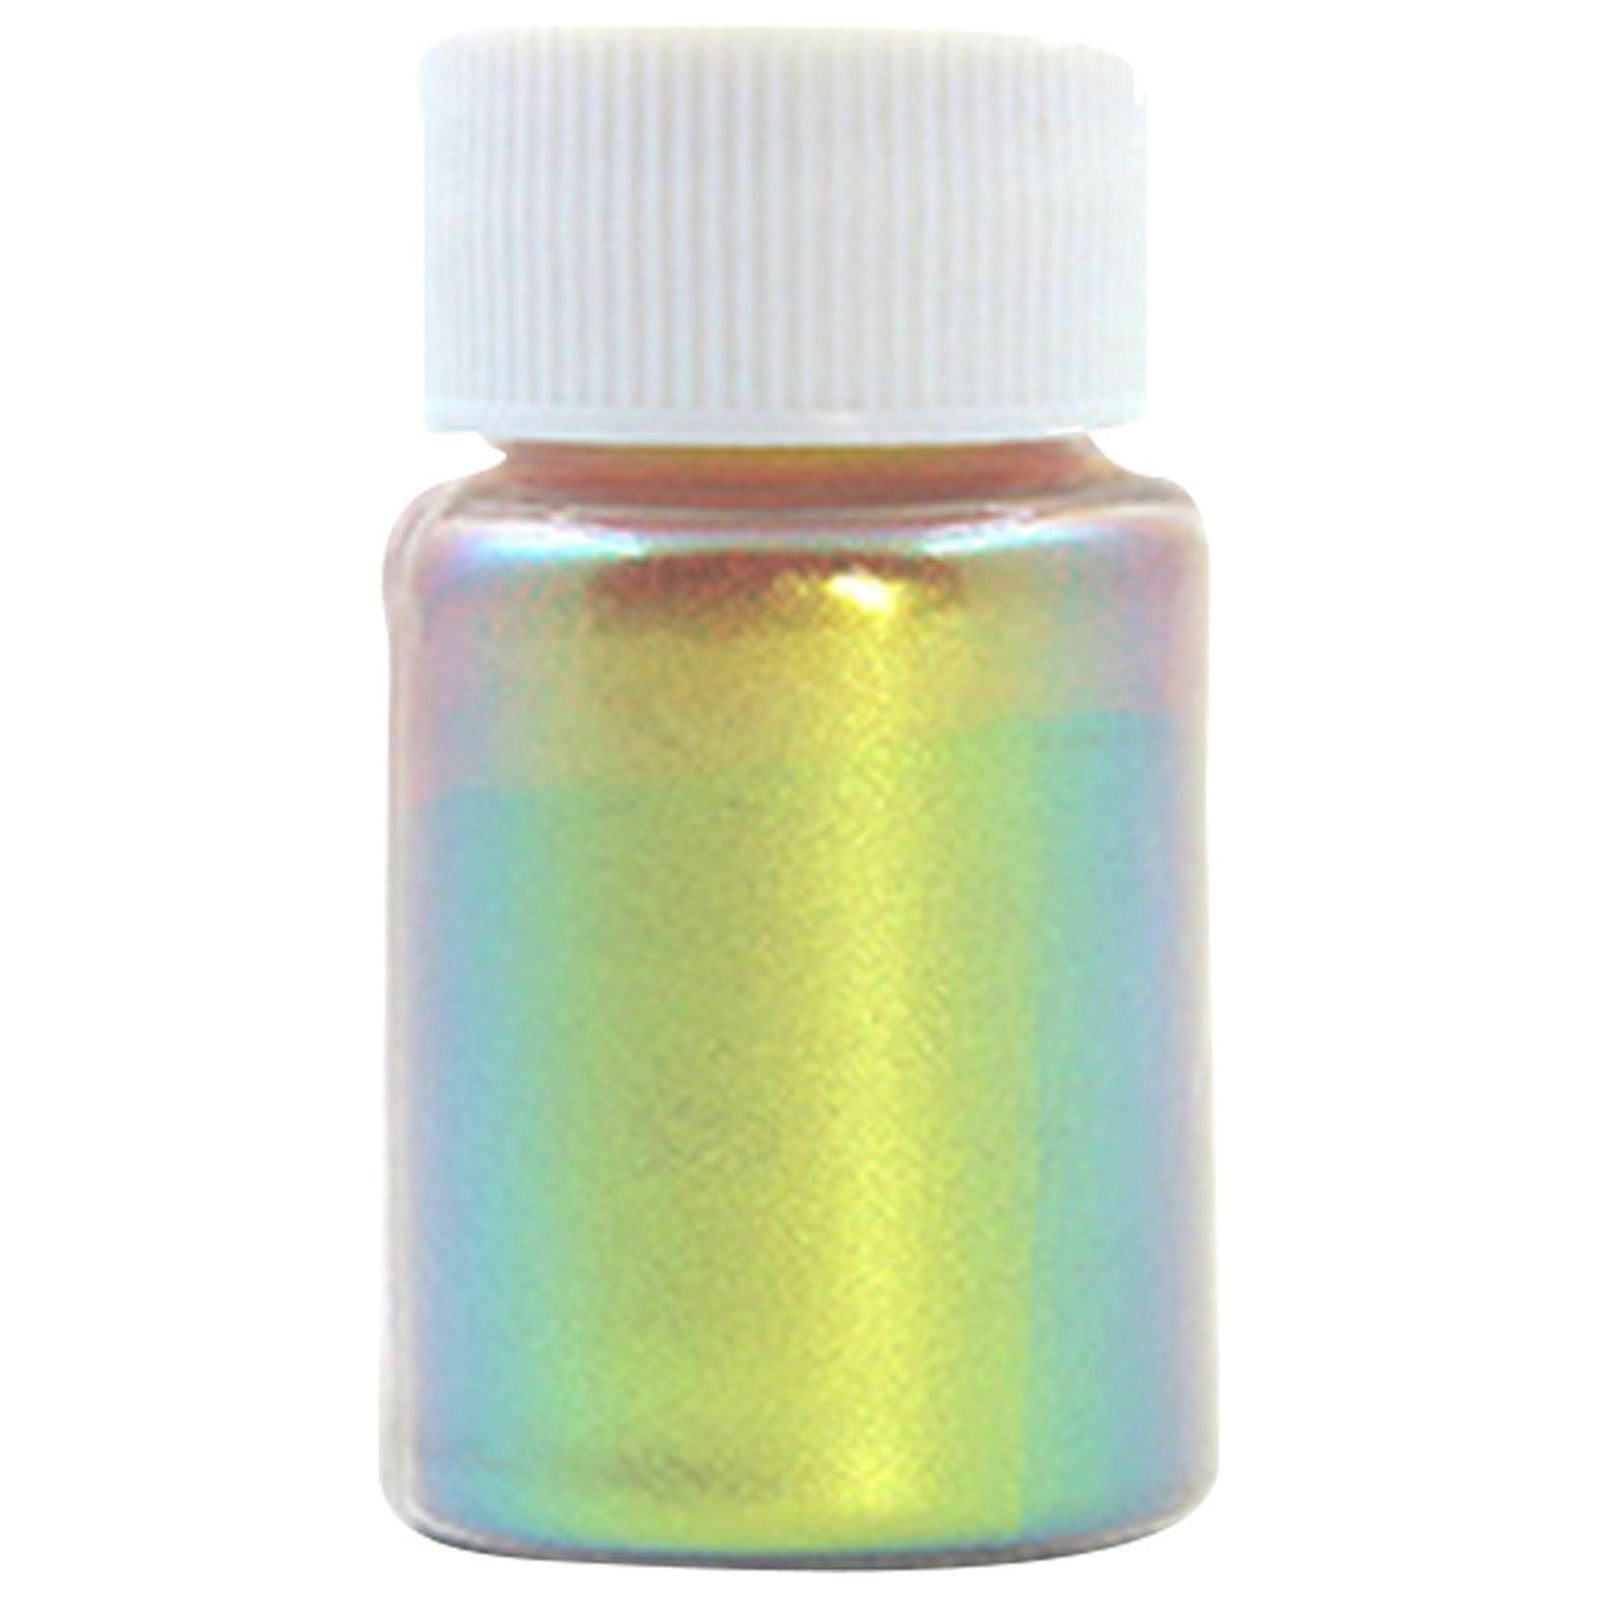 Chameleon Mica Powder - Color Shift Mica - Holographic Mica Pigment - Resin  Dye